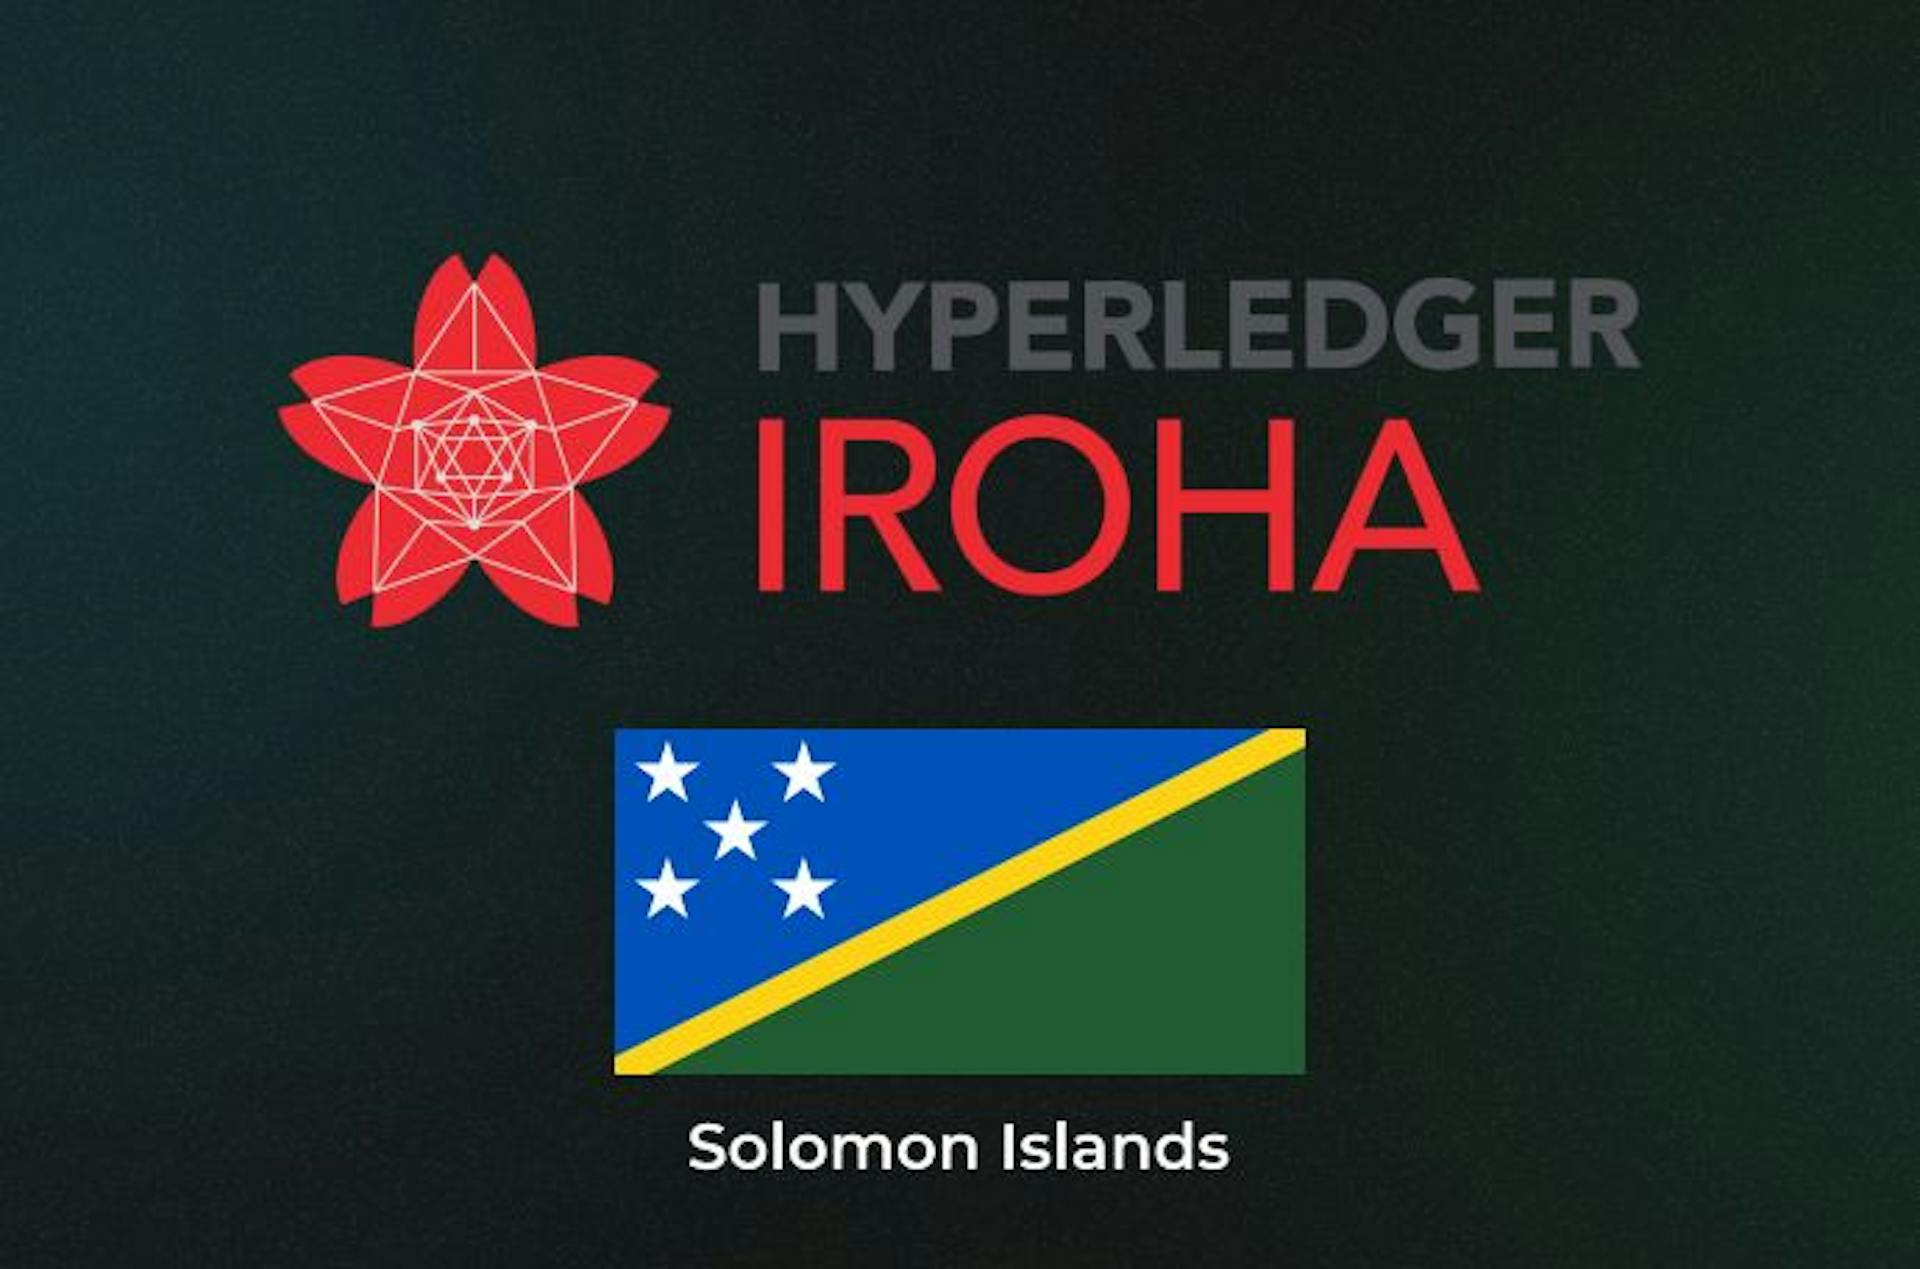 Solomon Islands implements CBDC on Hyperledger Iroha